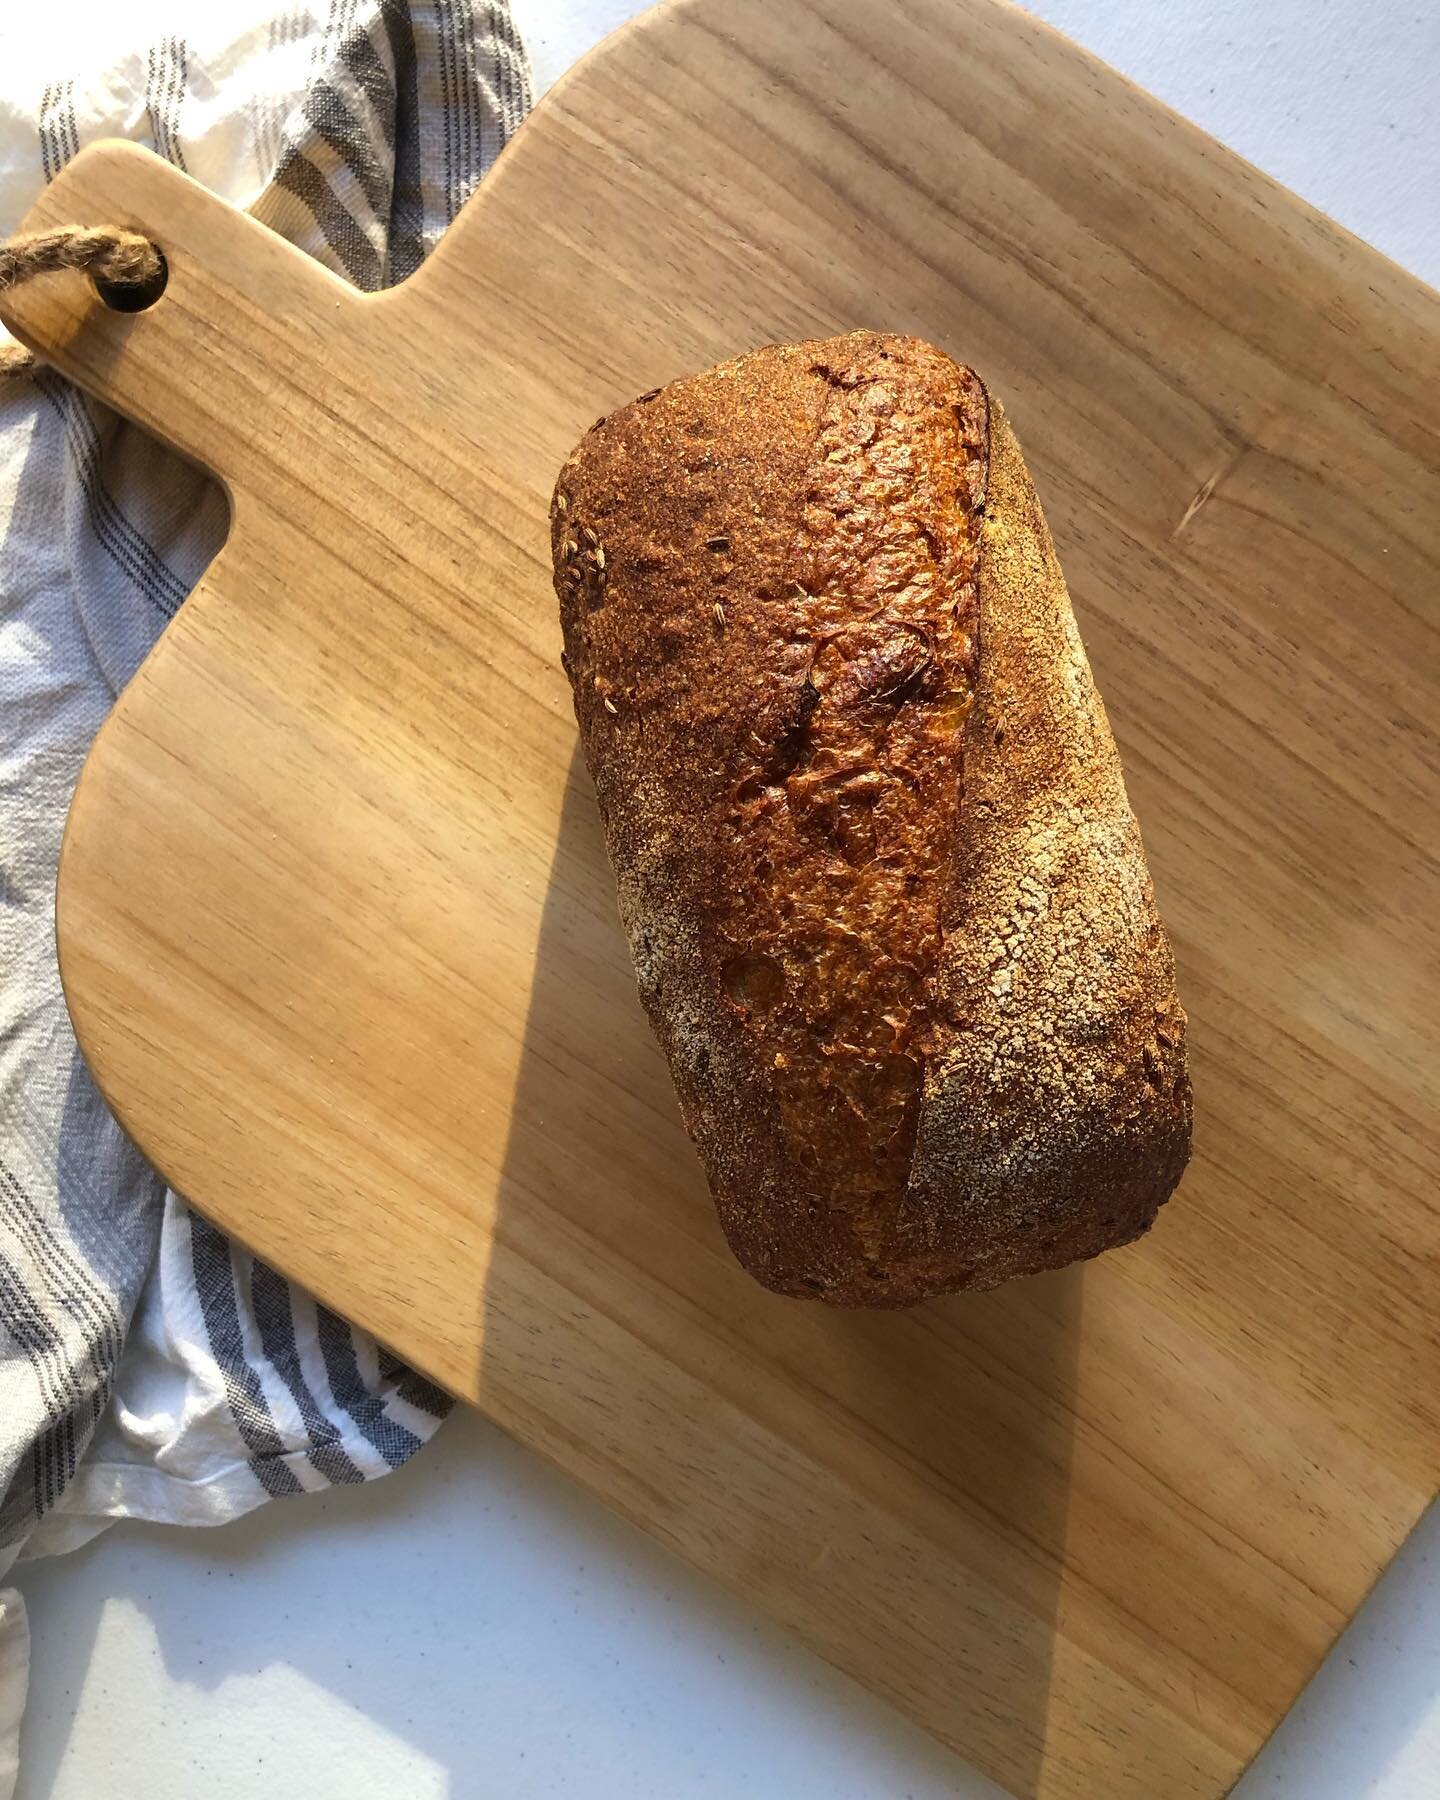 Beautiful rye sourdough sandwich loaf. This bread boasts a soft crumb with malty, nutty notes and a hint of fruitiness. 

#sourdough #sourdoughbread #sourdoughbaking #levain #wildyeast #realbread #sourdoughclub #ryebread #bestofatlanta #atlantafood #